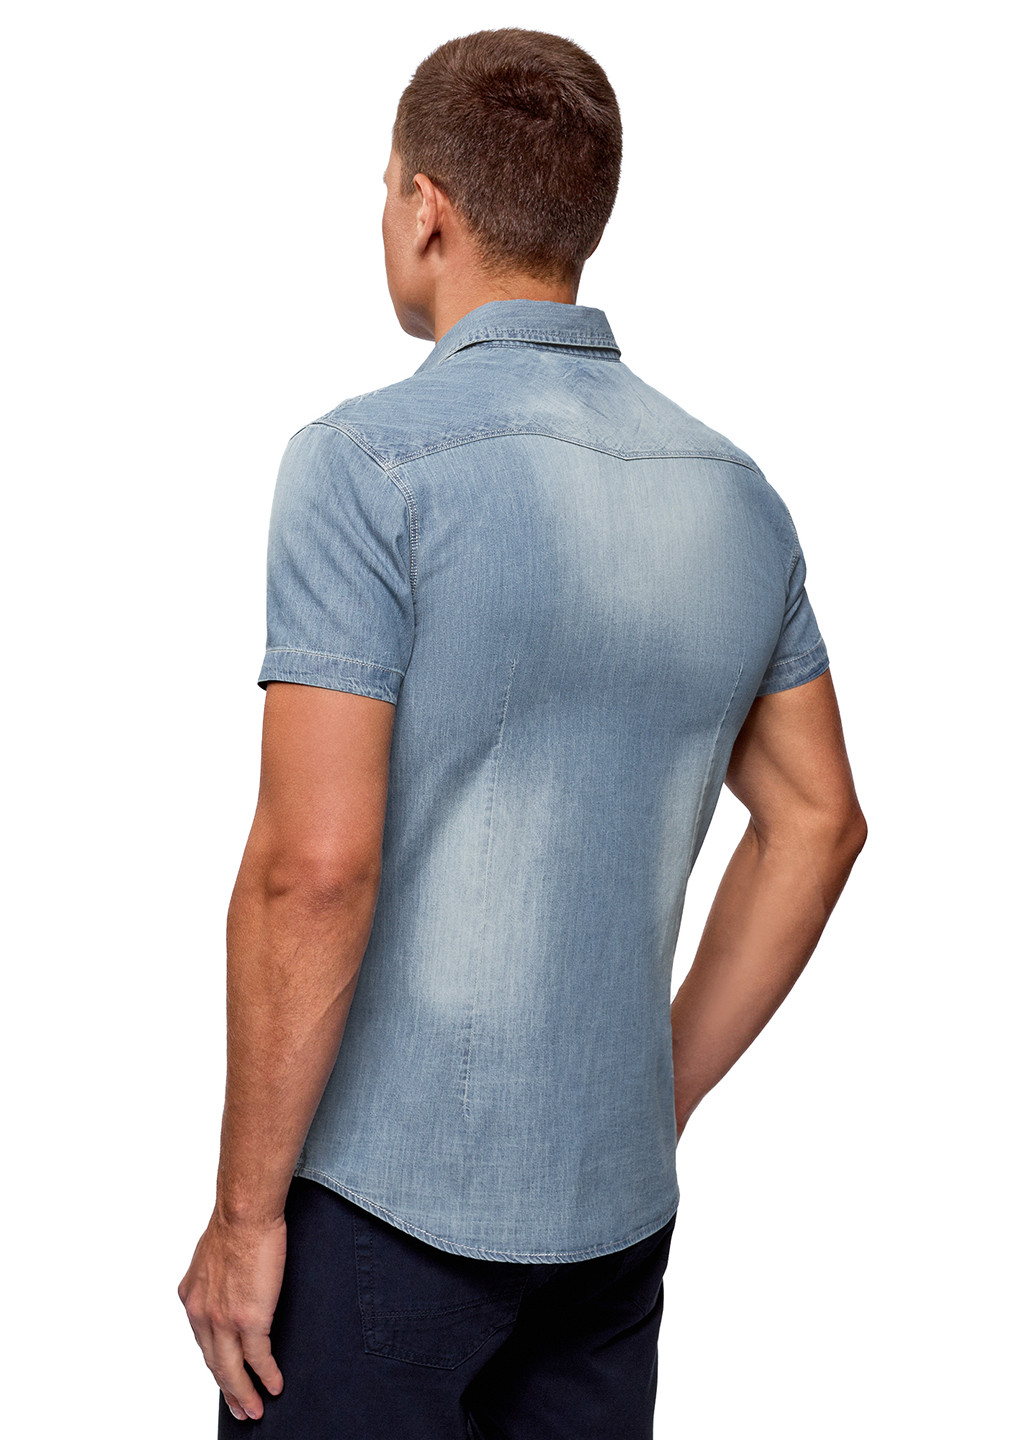 Голубой джинсовая рубашка однотонная Oodji с коротким рукавом